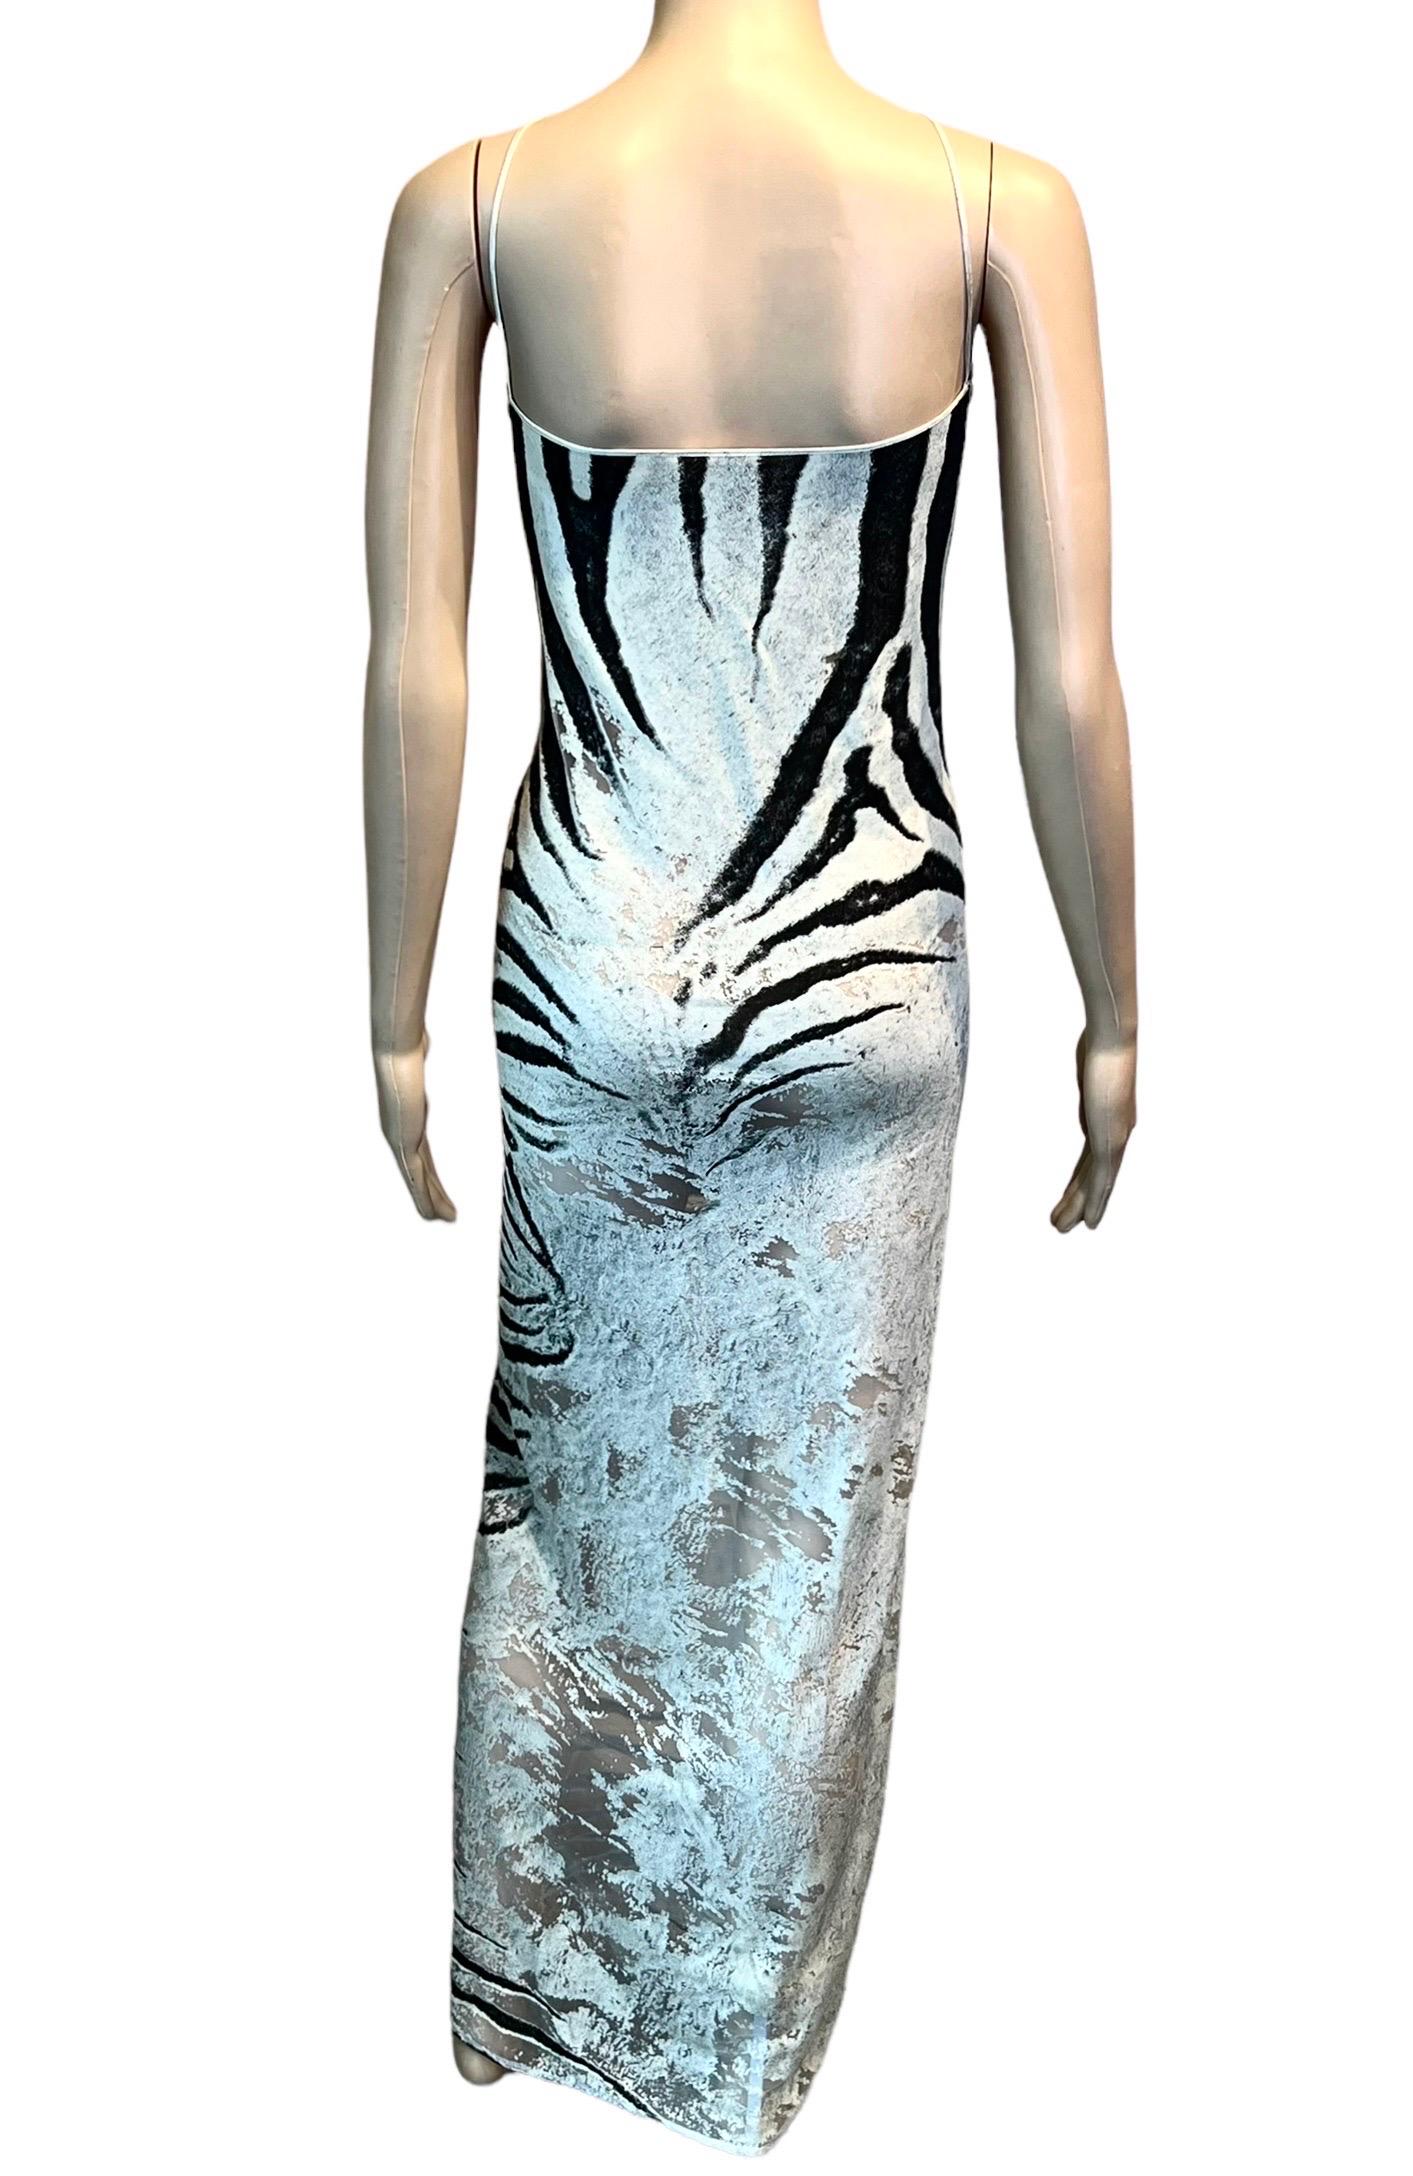 Roberto Cavalli S/S 1999 Runway Sheer Mesh Zebra Print Slip Evening Dress Gown For Sale 1